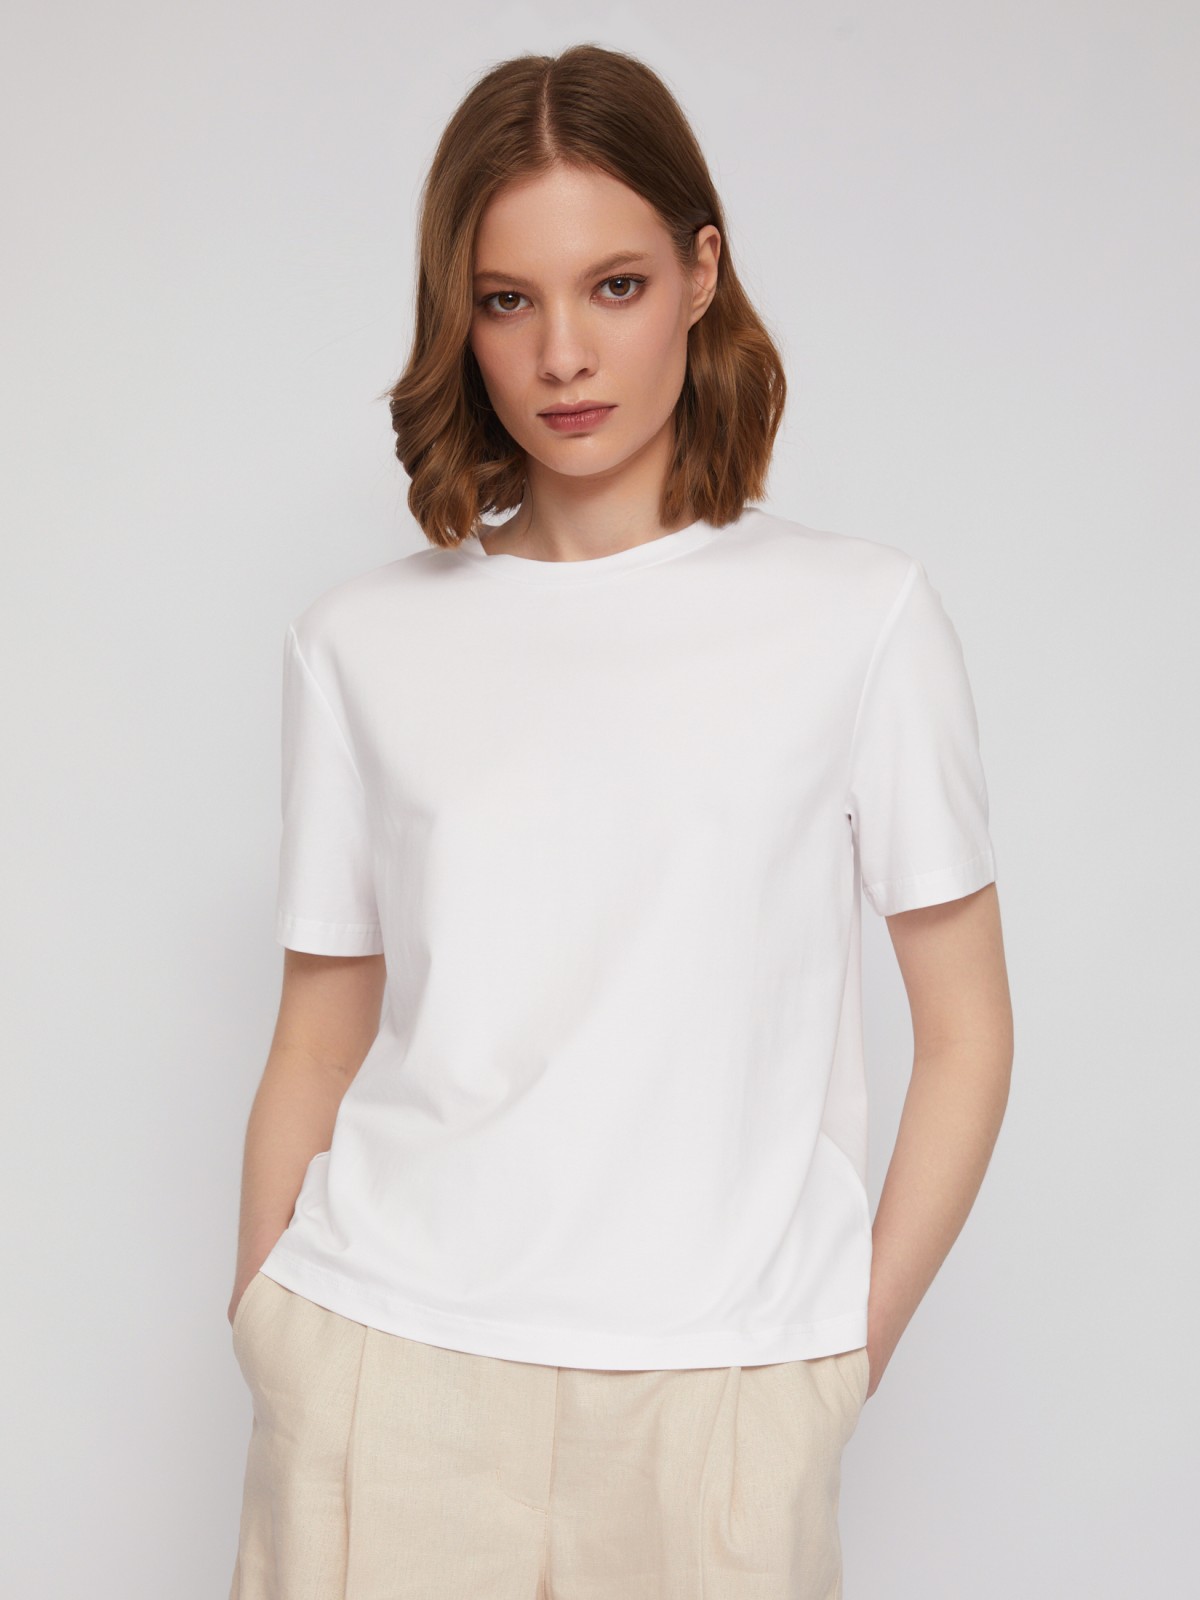 Трикотажная футболка с коротким рукавом zolla 024213259012, цвет белый, размер S - фото 1